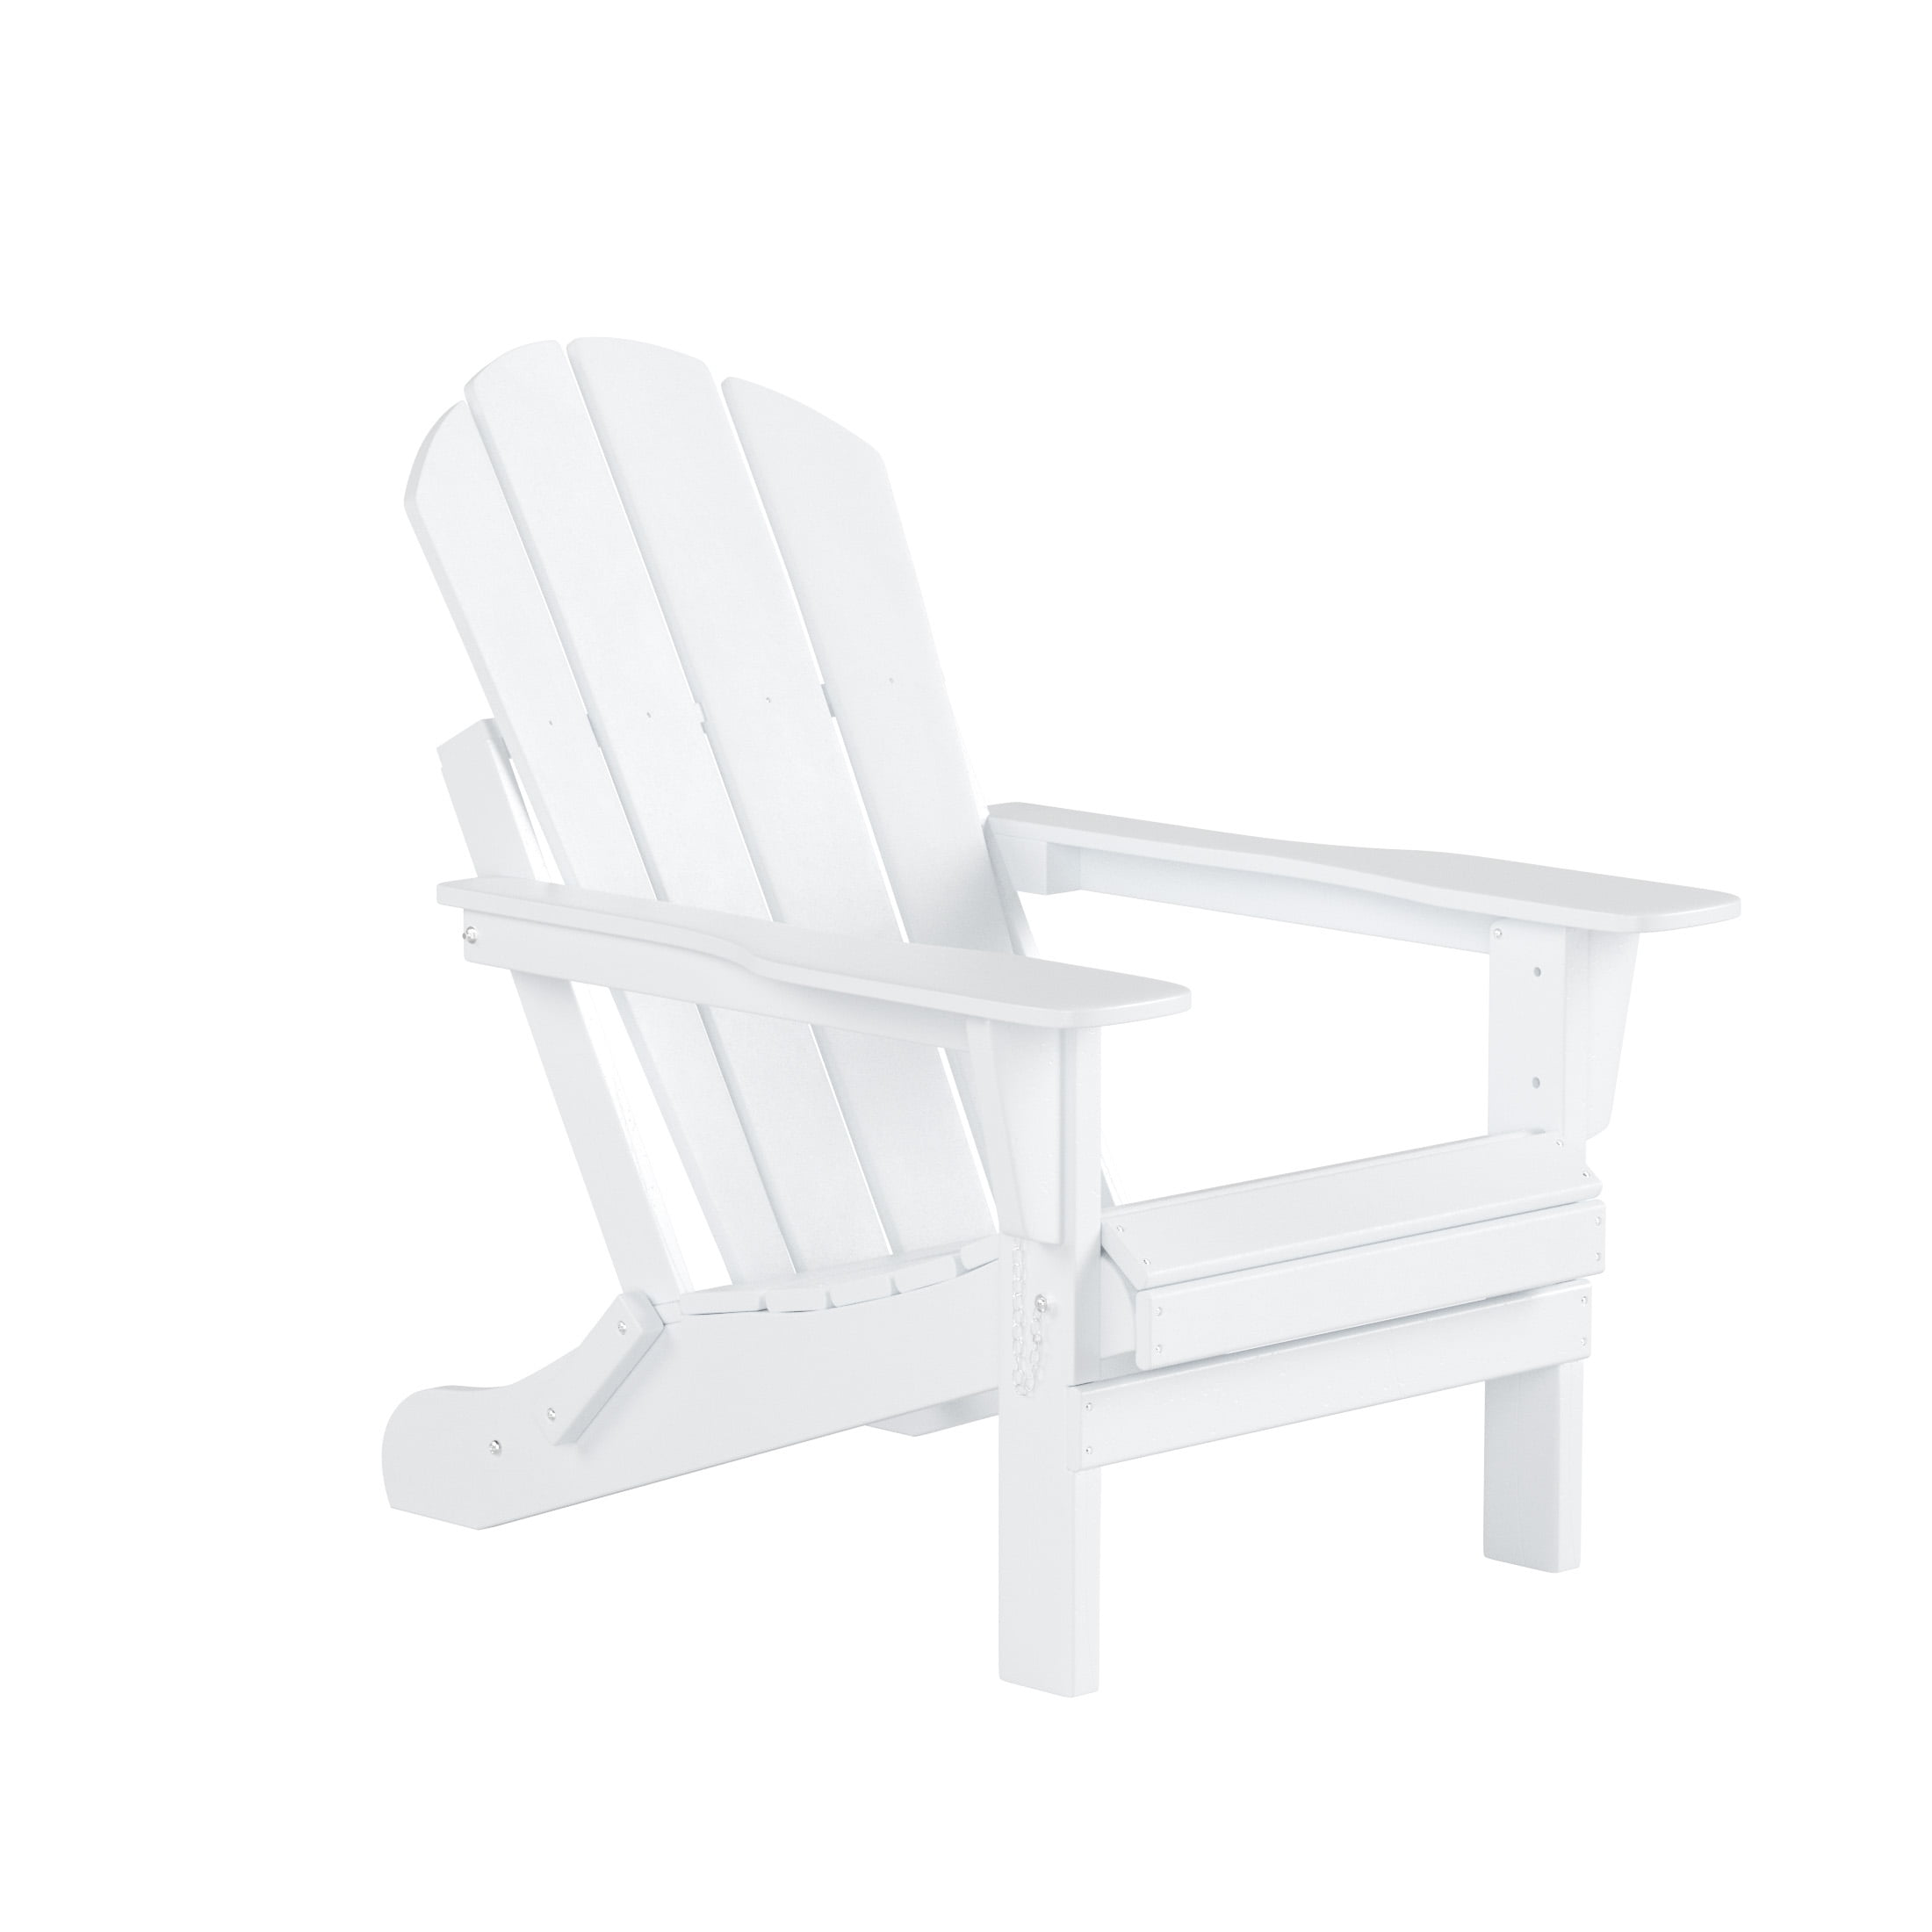 Keter Adirondack Chair Seat Indoor Outdoor Seating Furniture Garden White Resin 